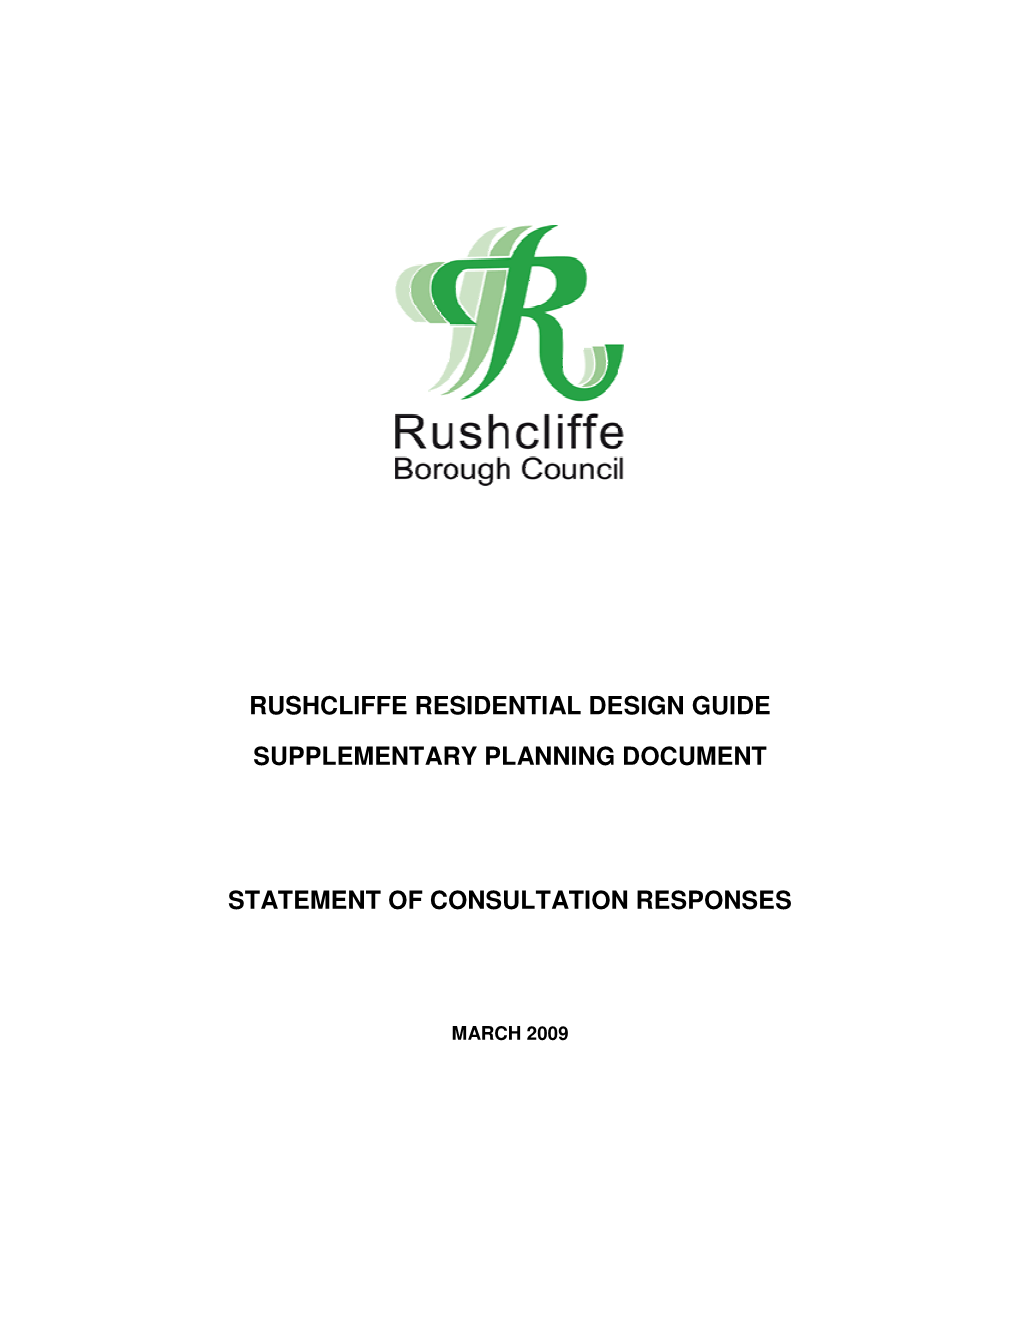 Rushcliffe Residential Design Guide Supplementary